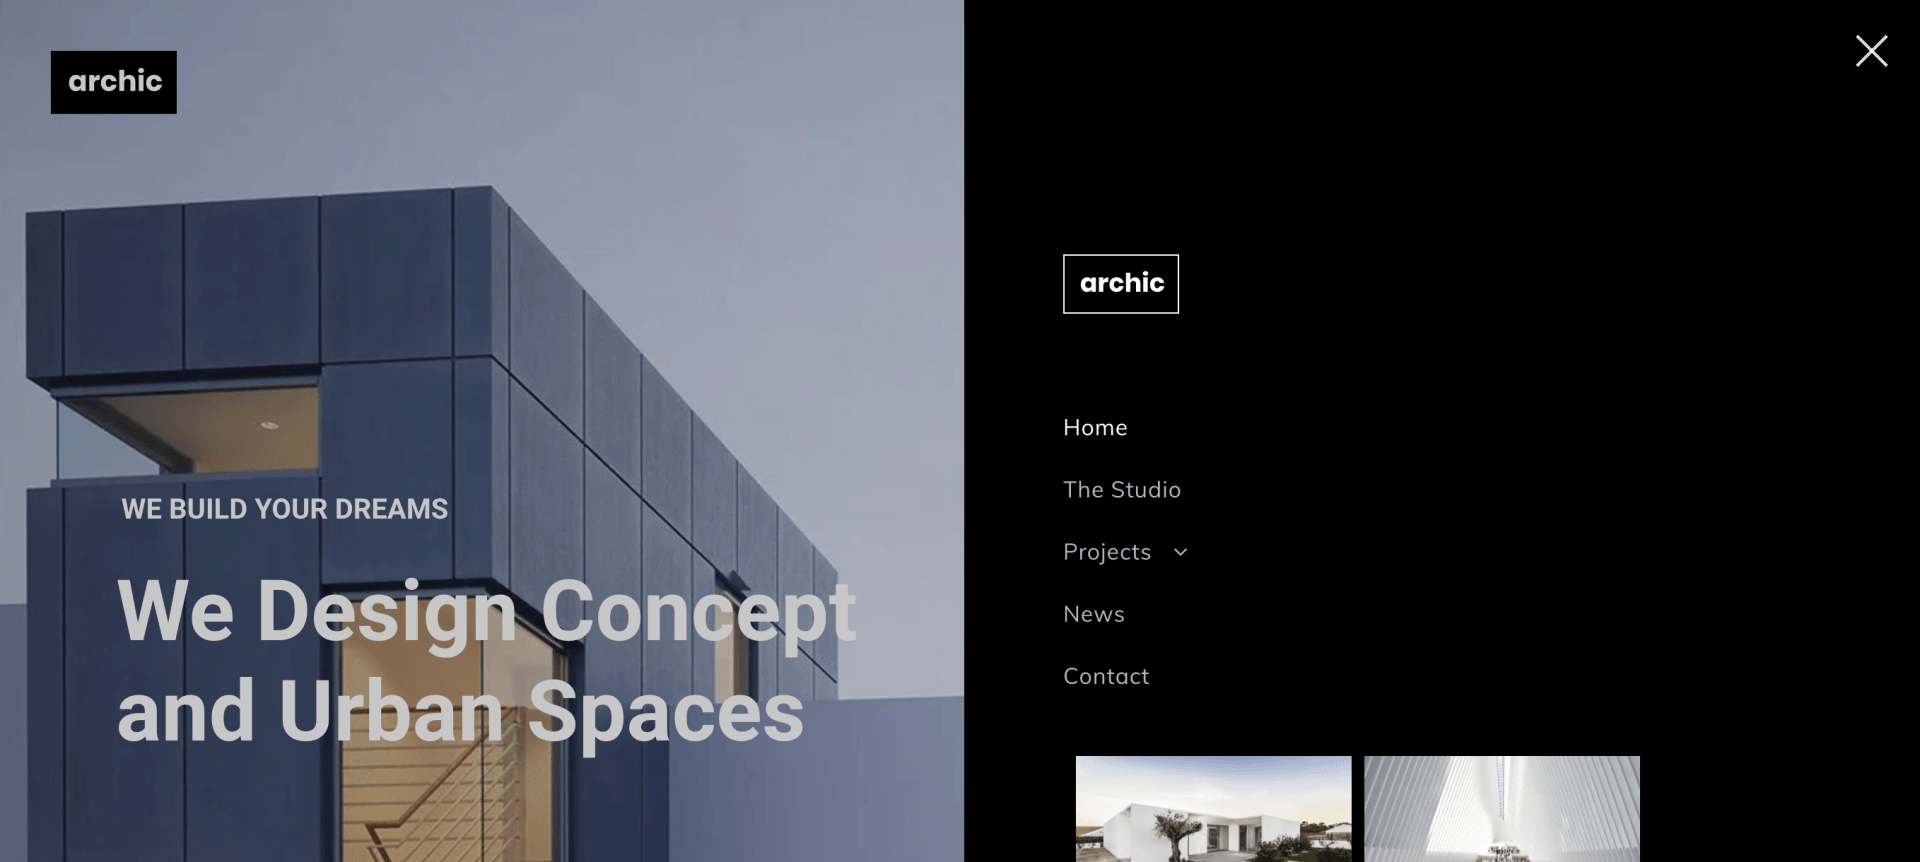 A screenshot displaying the open menu of an architect website